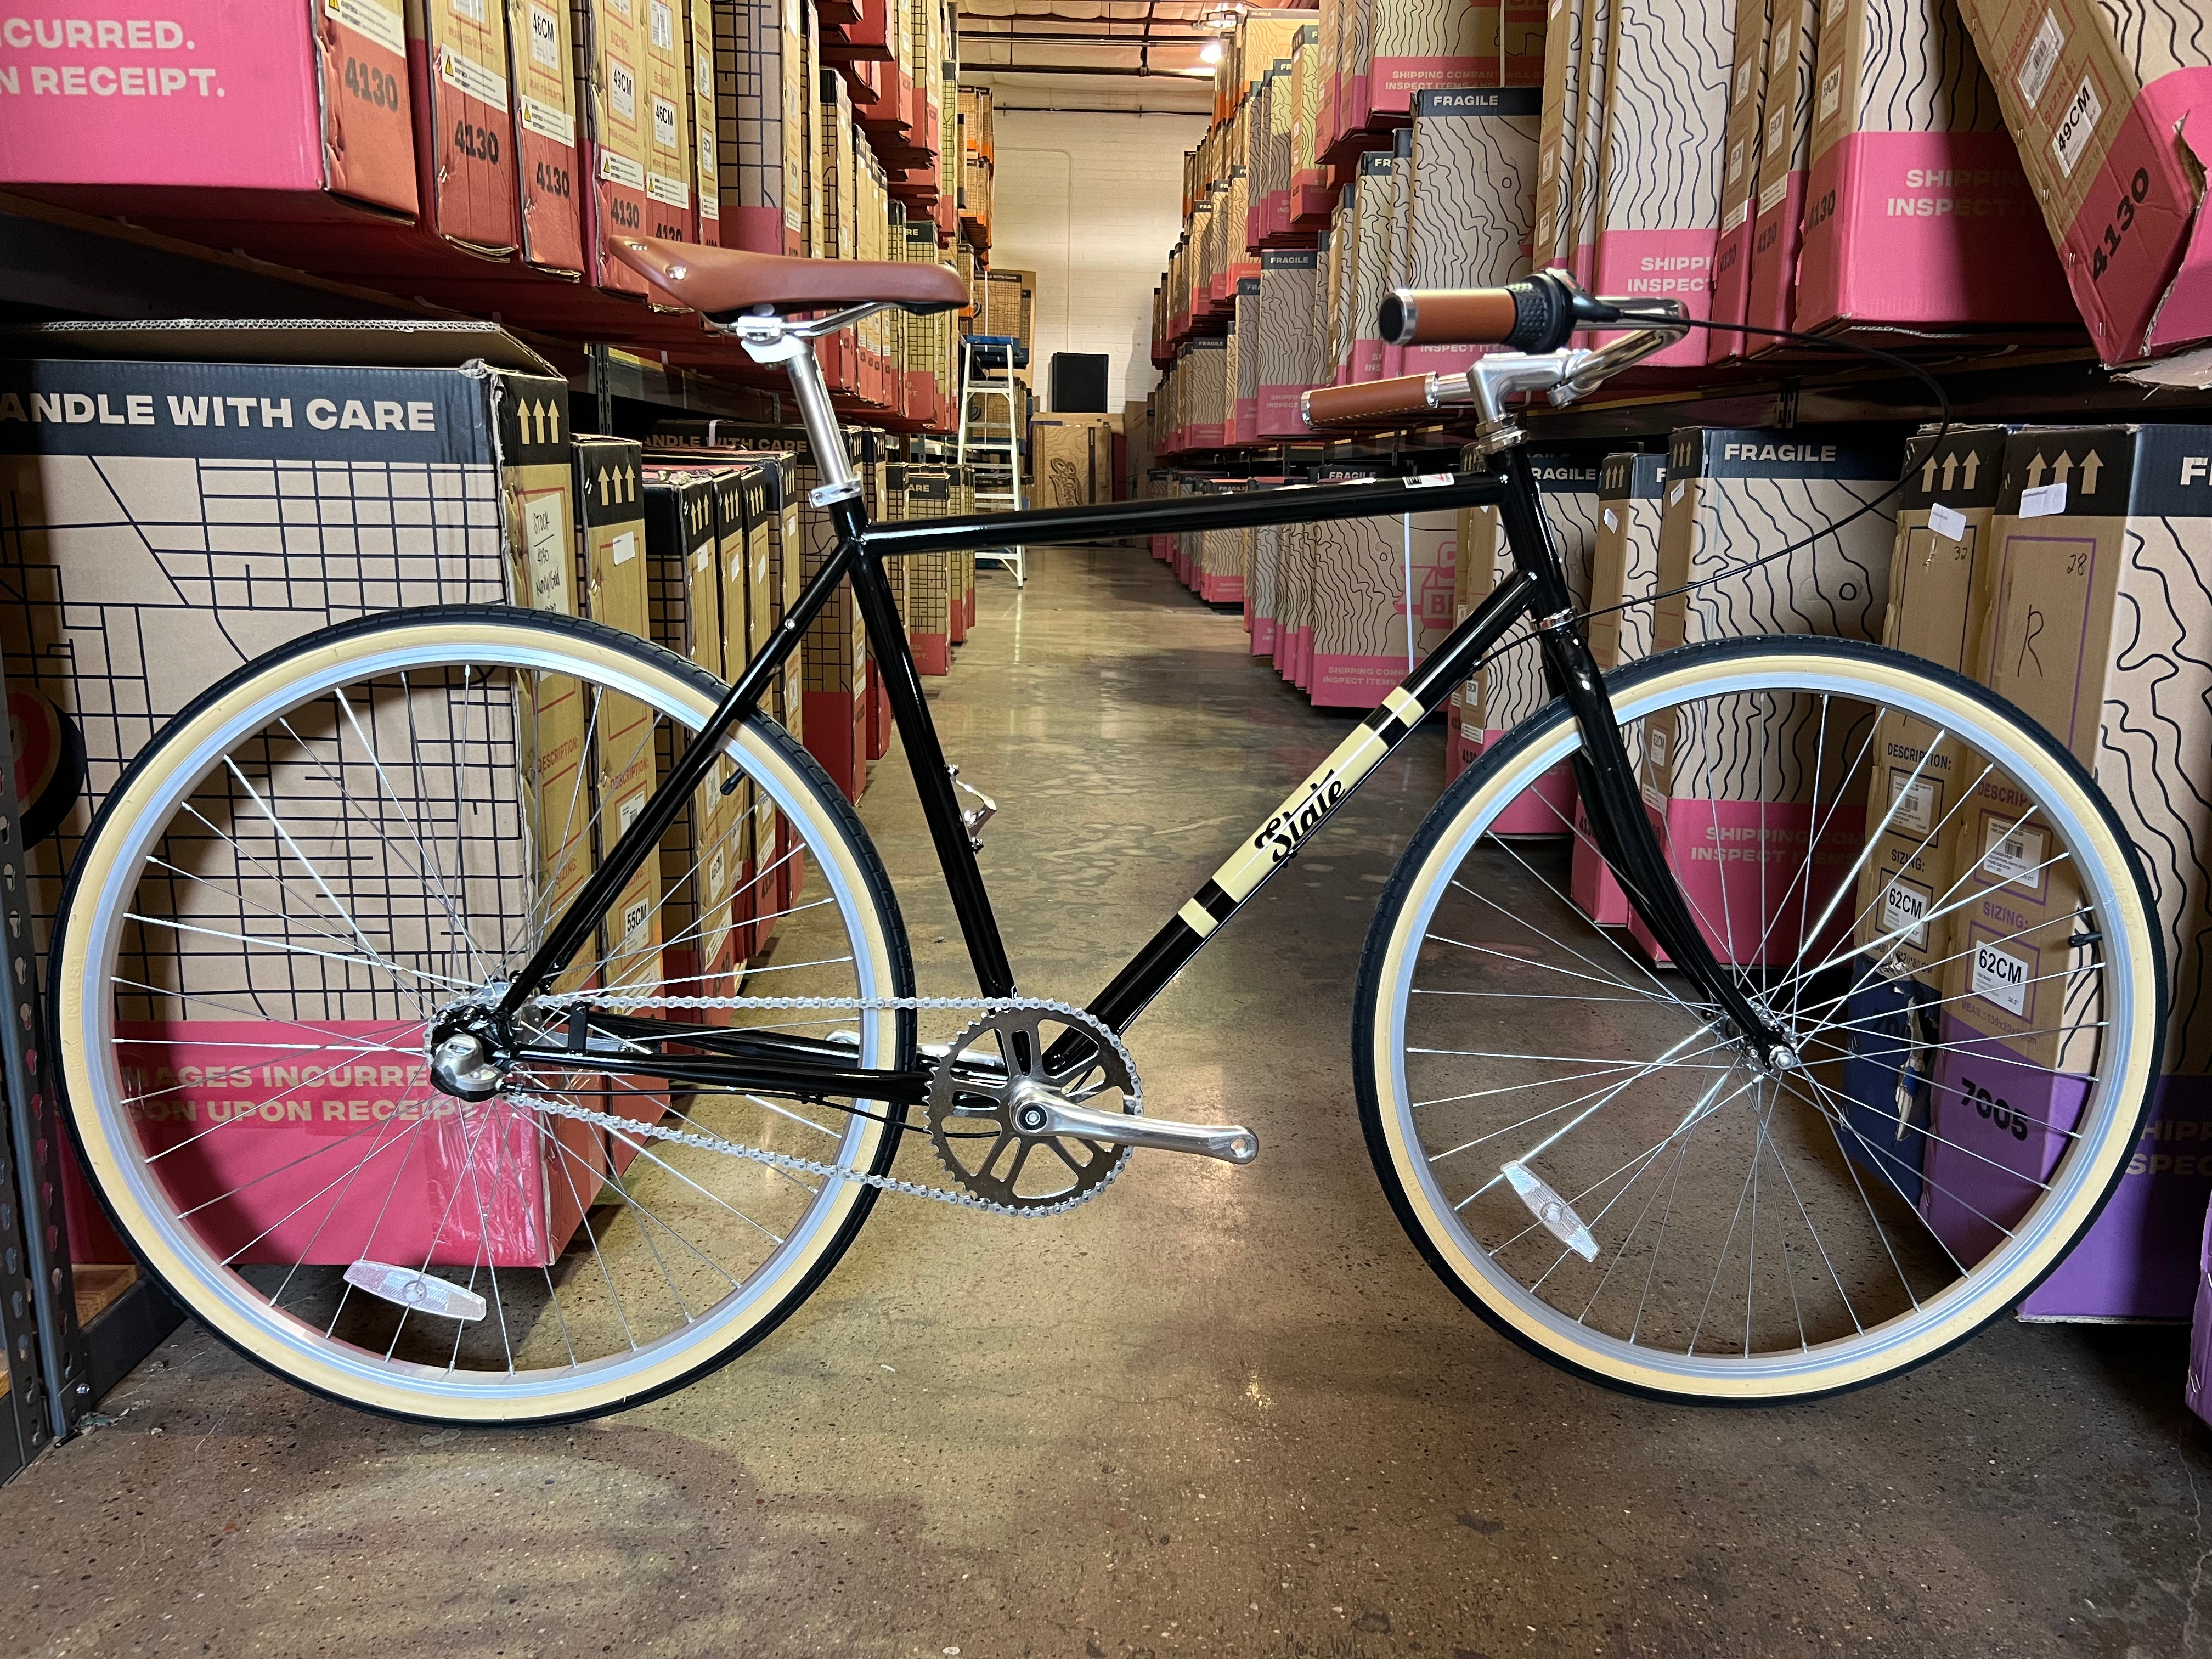 901-city-bike-black-tan-3-speed-size-medium-53cm-good-condition